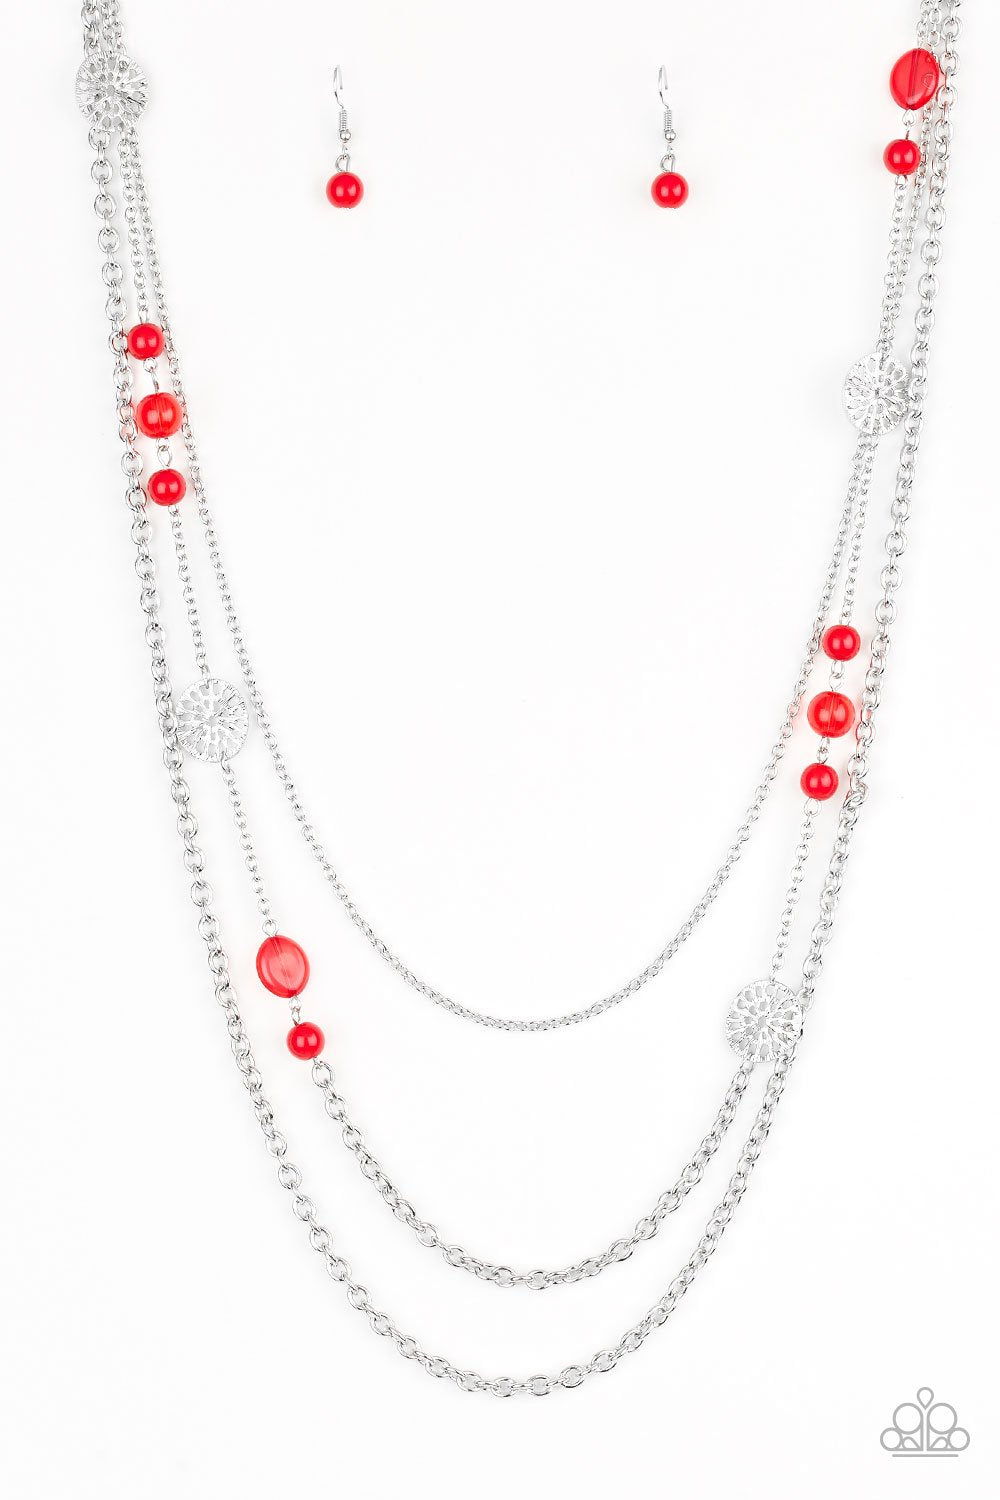 Pretty Pop-tastic - Red Necklace freeshipping - JewLz4u Gemstone Gallery